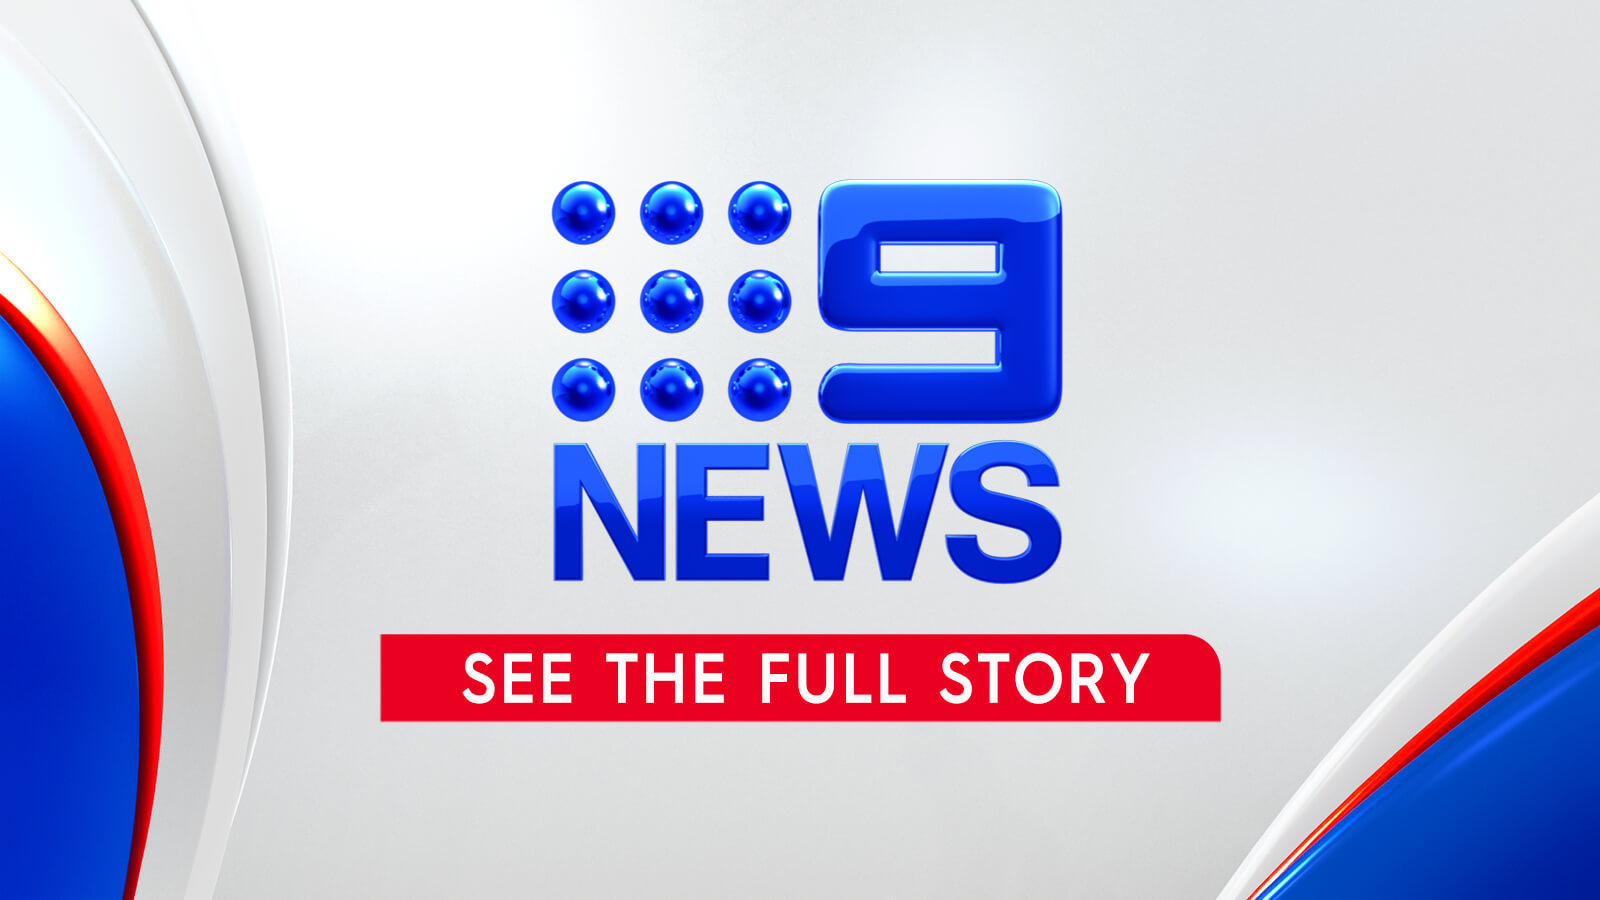 9News logo "See the full story"